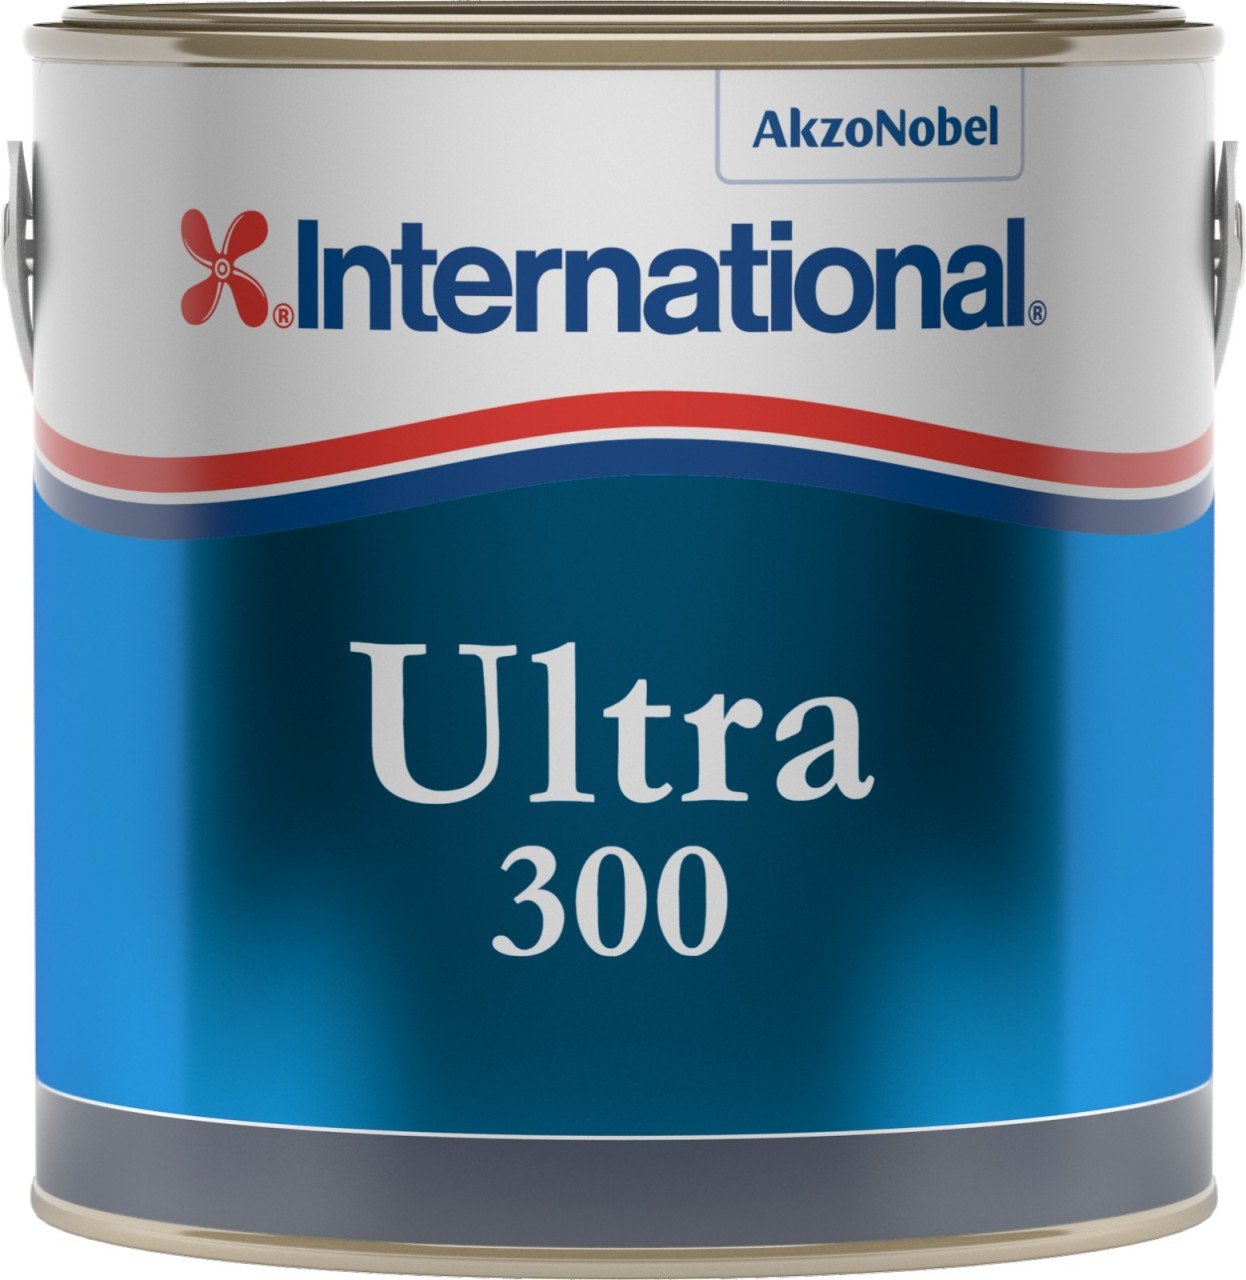 International Ultra 300 2.5 LT Zehirli Boya Kırmızı